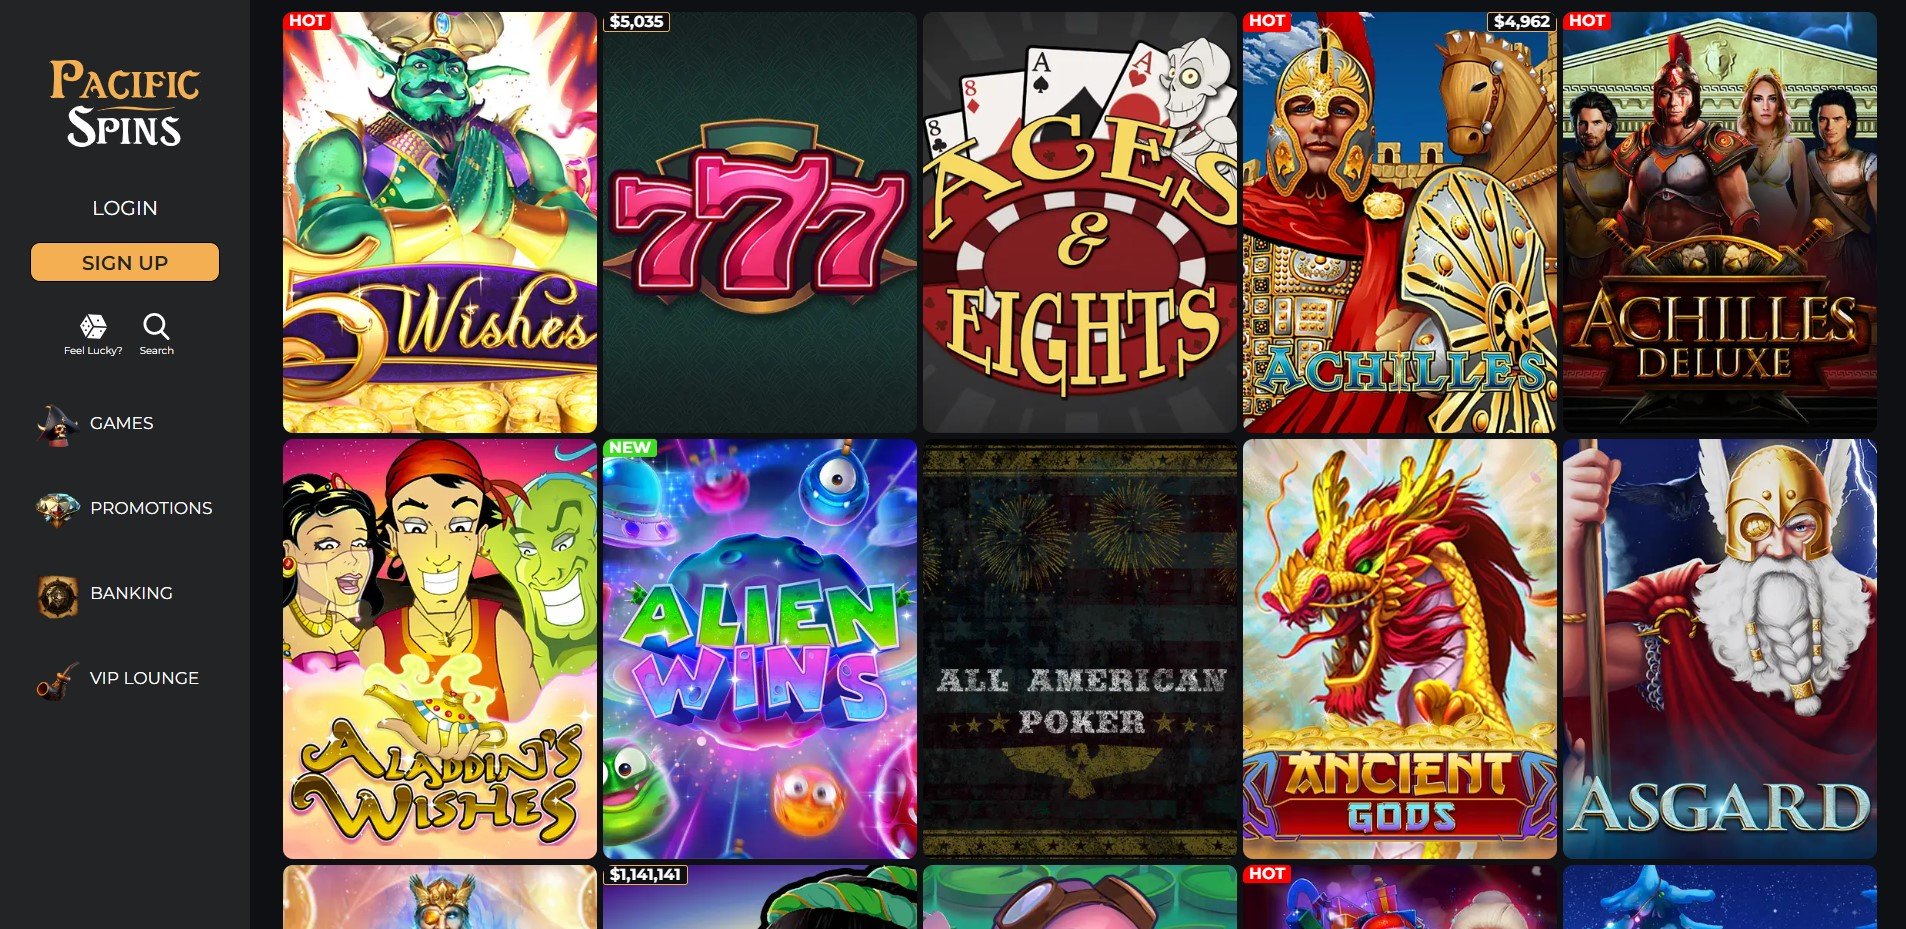 PacificSpins Casino Games